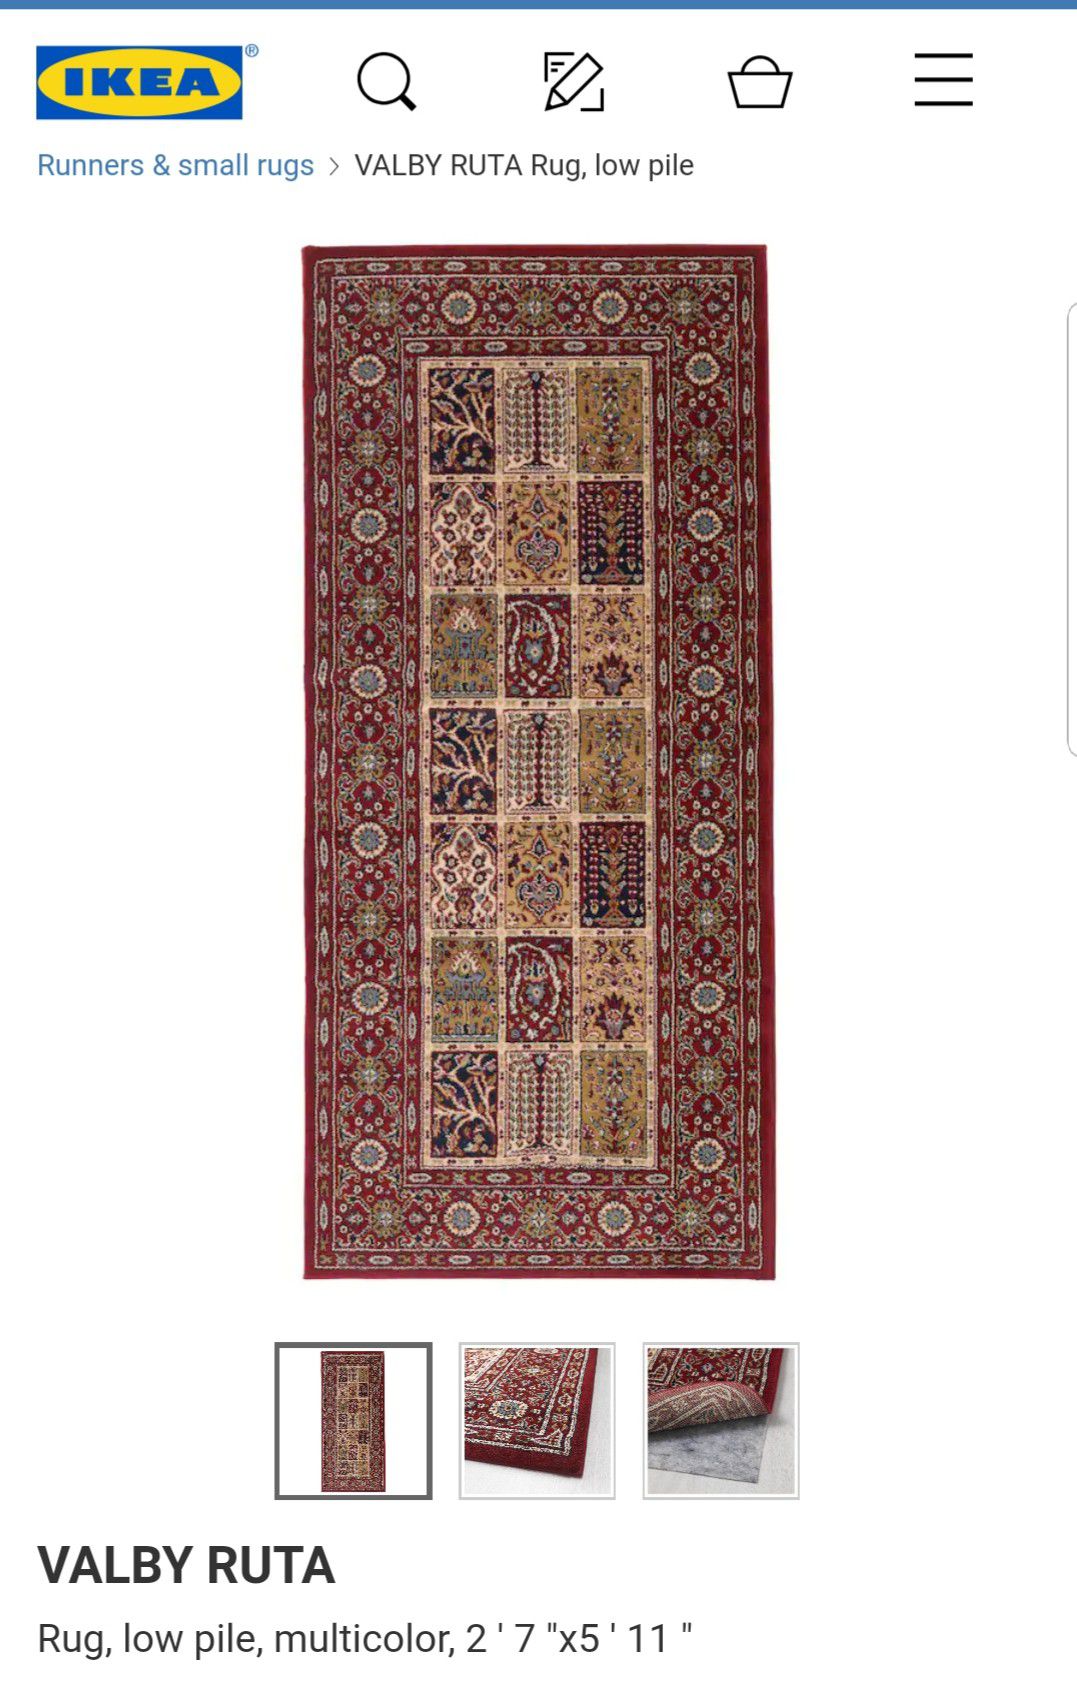 Small rugs - Runner rugs - IKEA